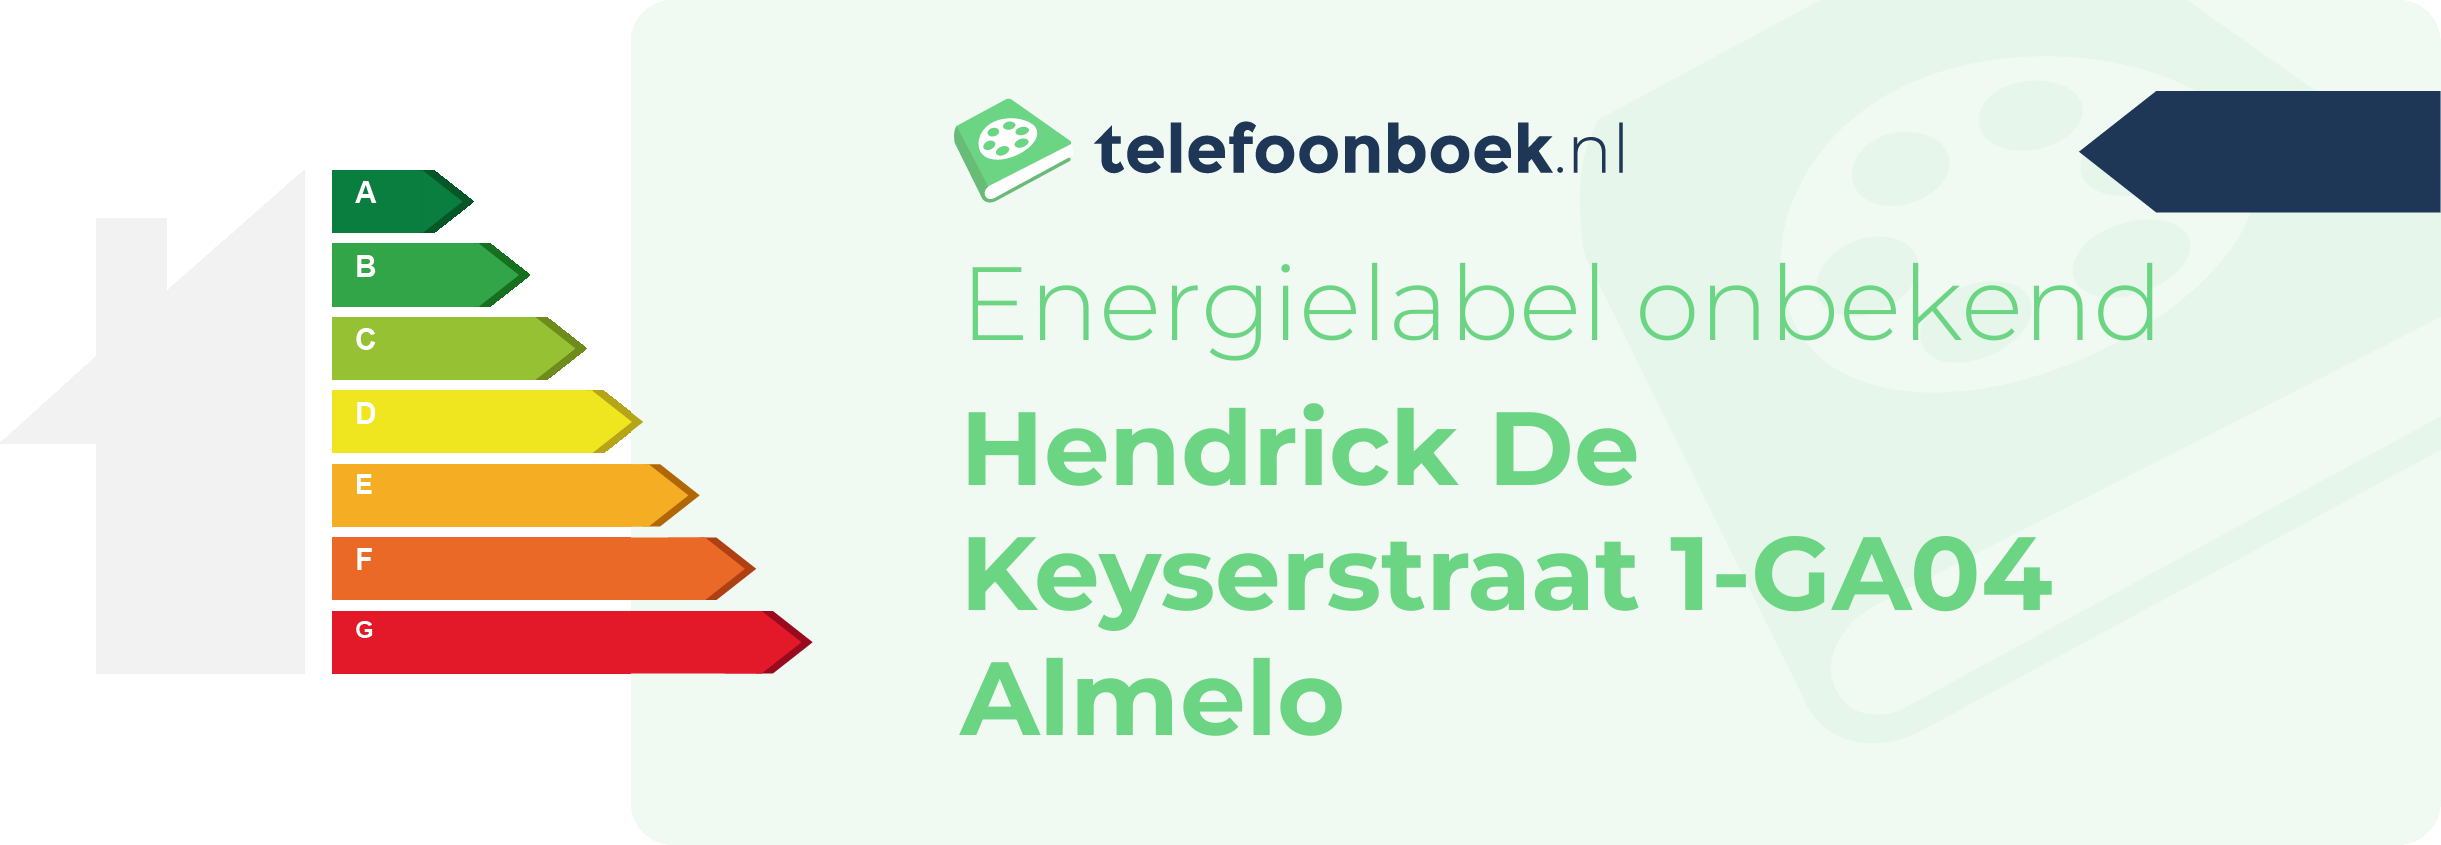 Energielabel Hendrick De Keyserstraat 1-GA04 Almelo